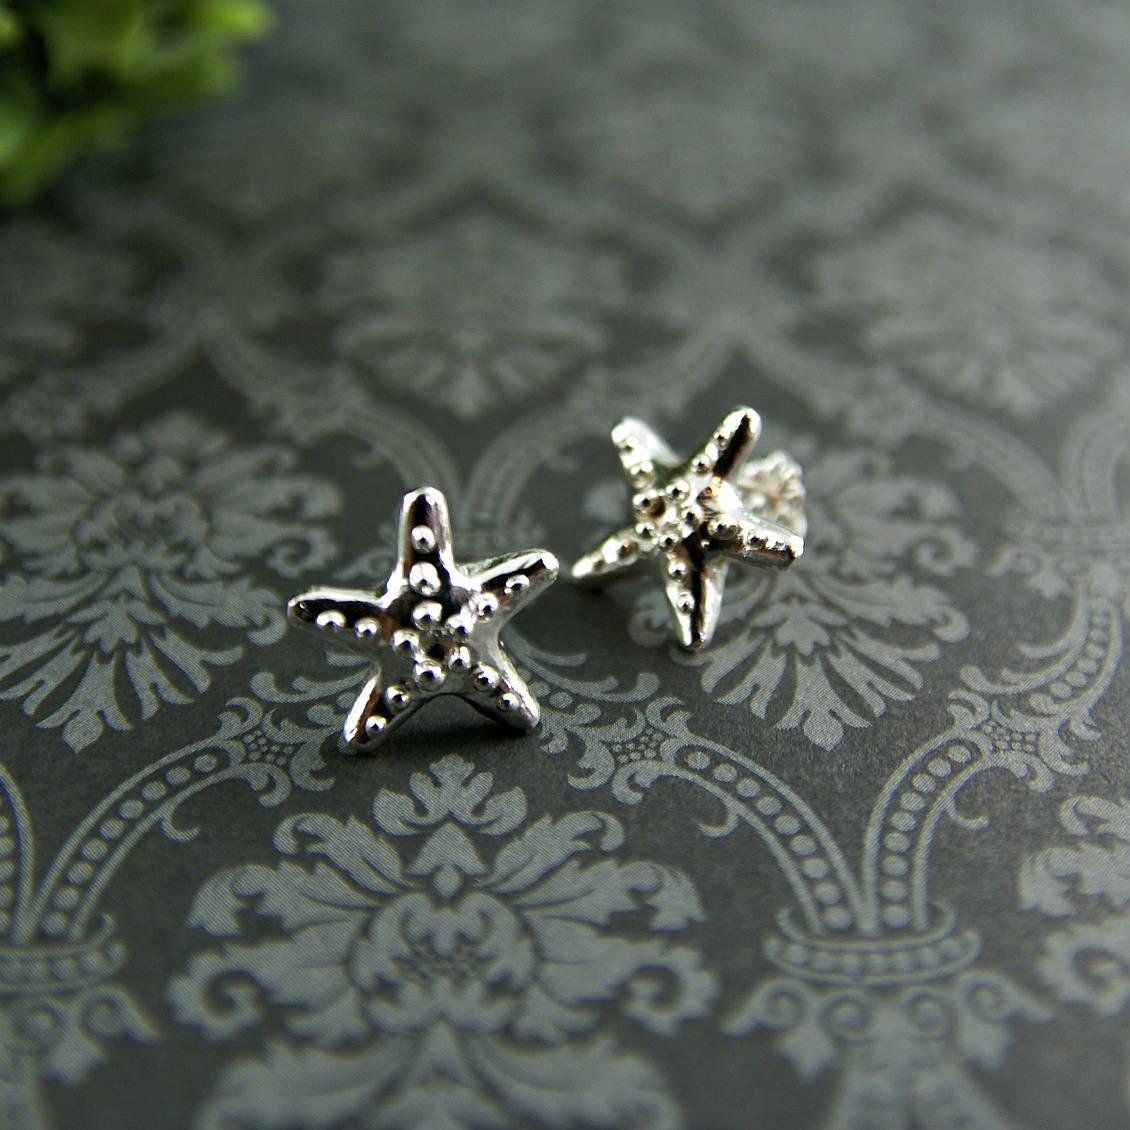 Starfish earrings in sterling silver